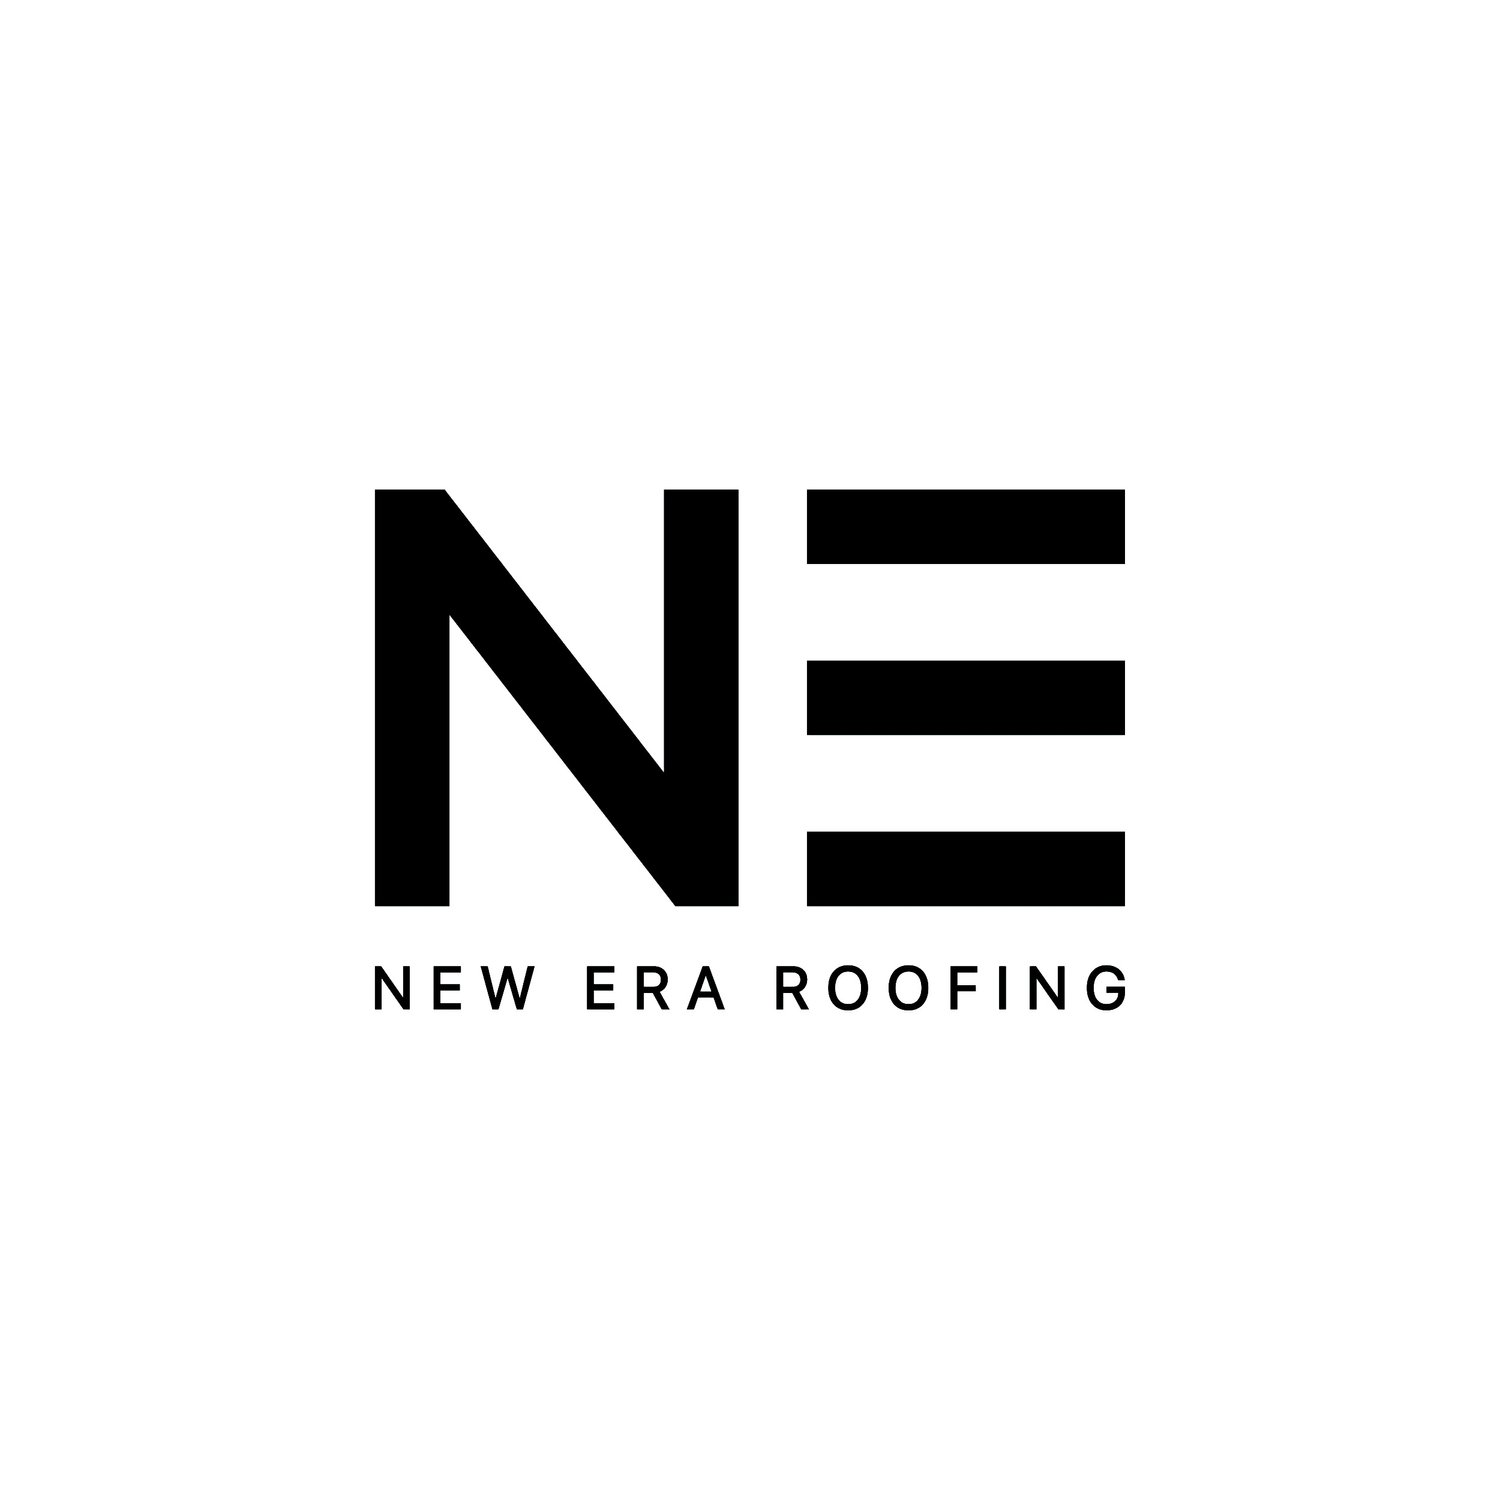 New Era Roofing Ltd